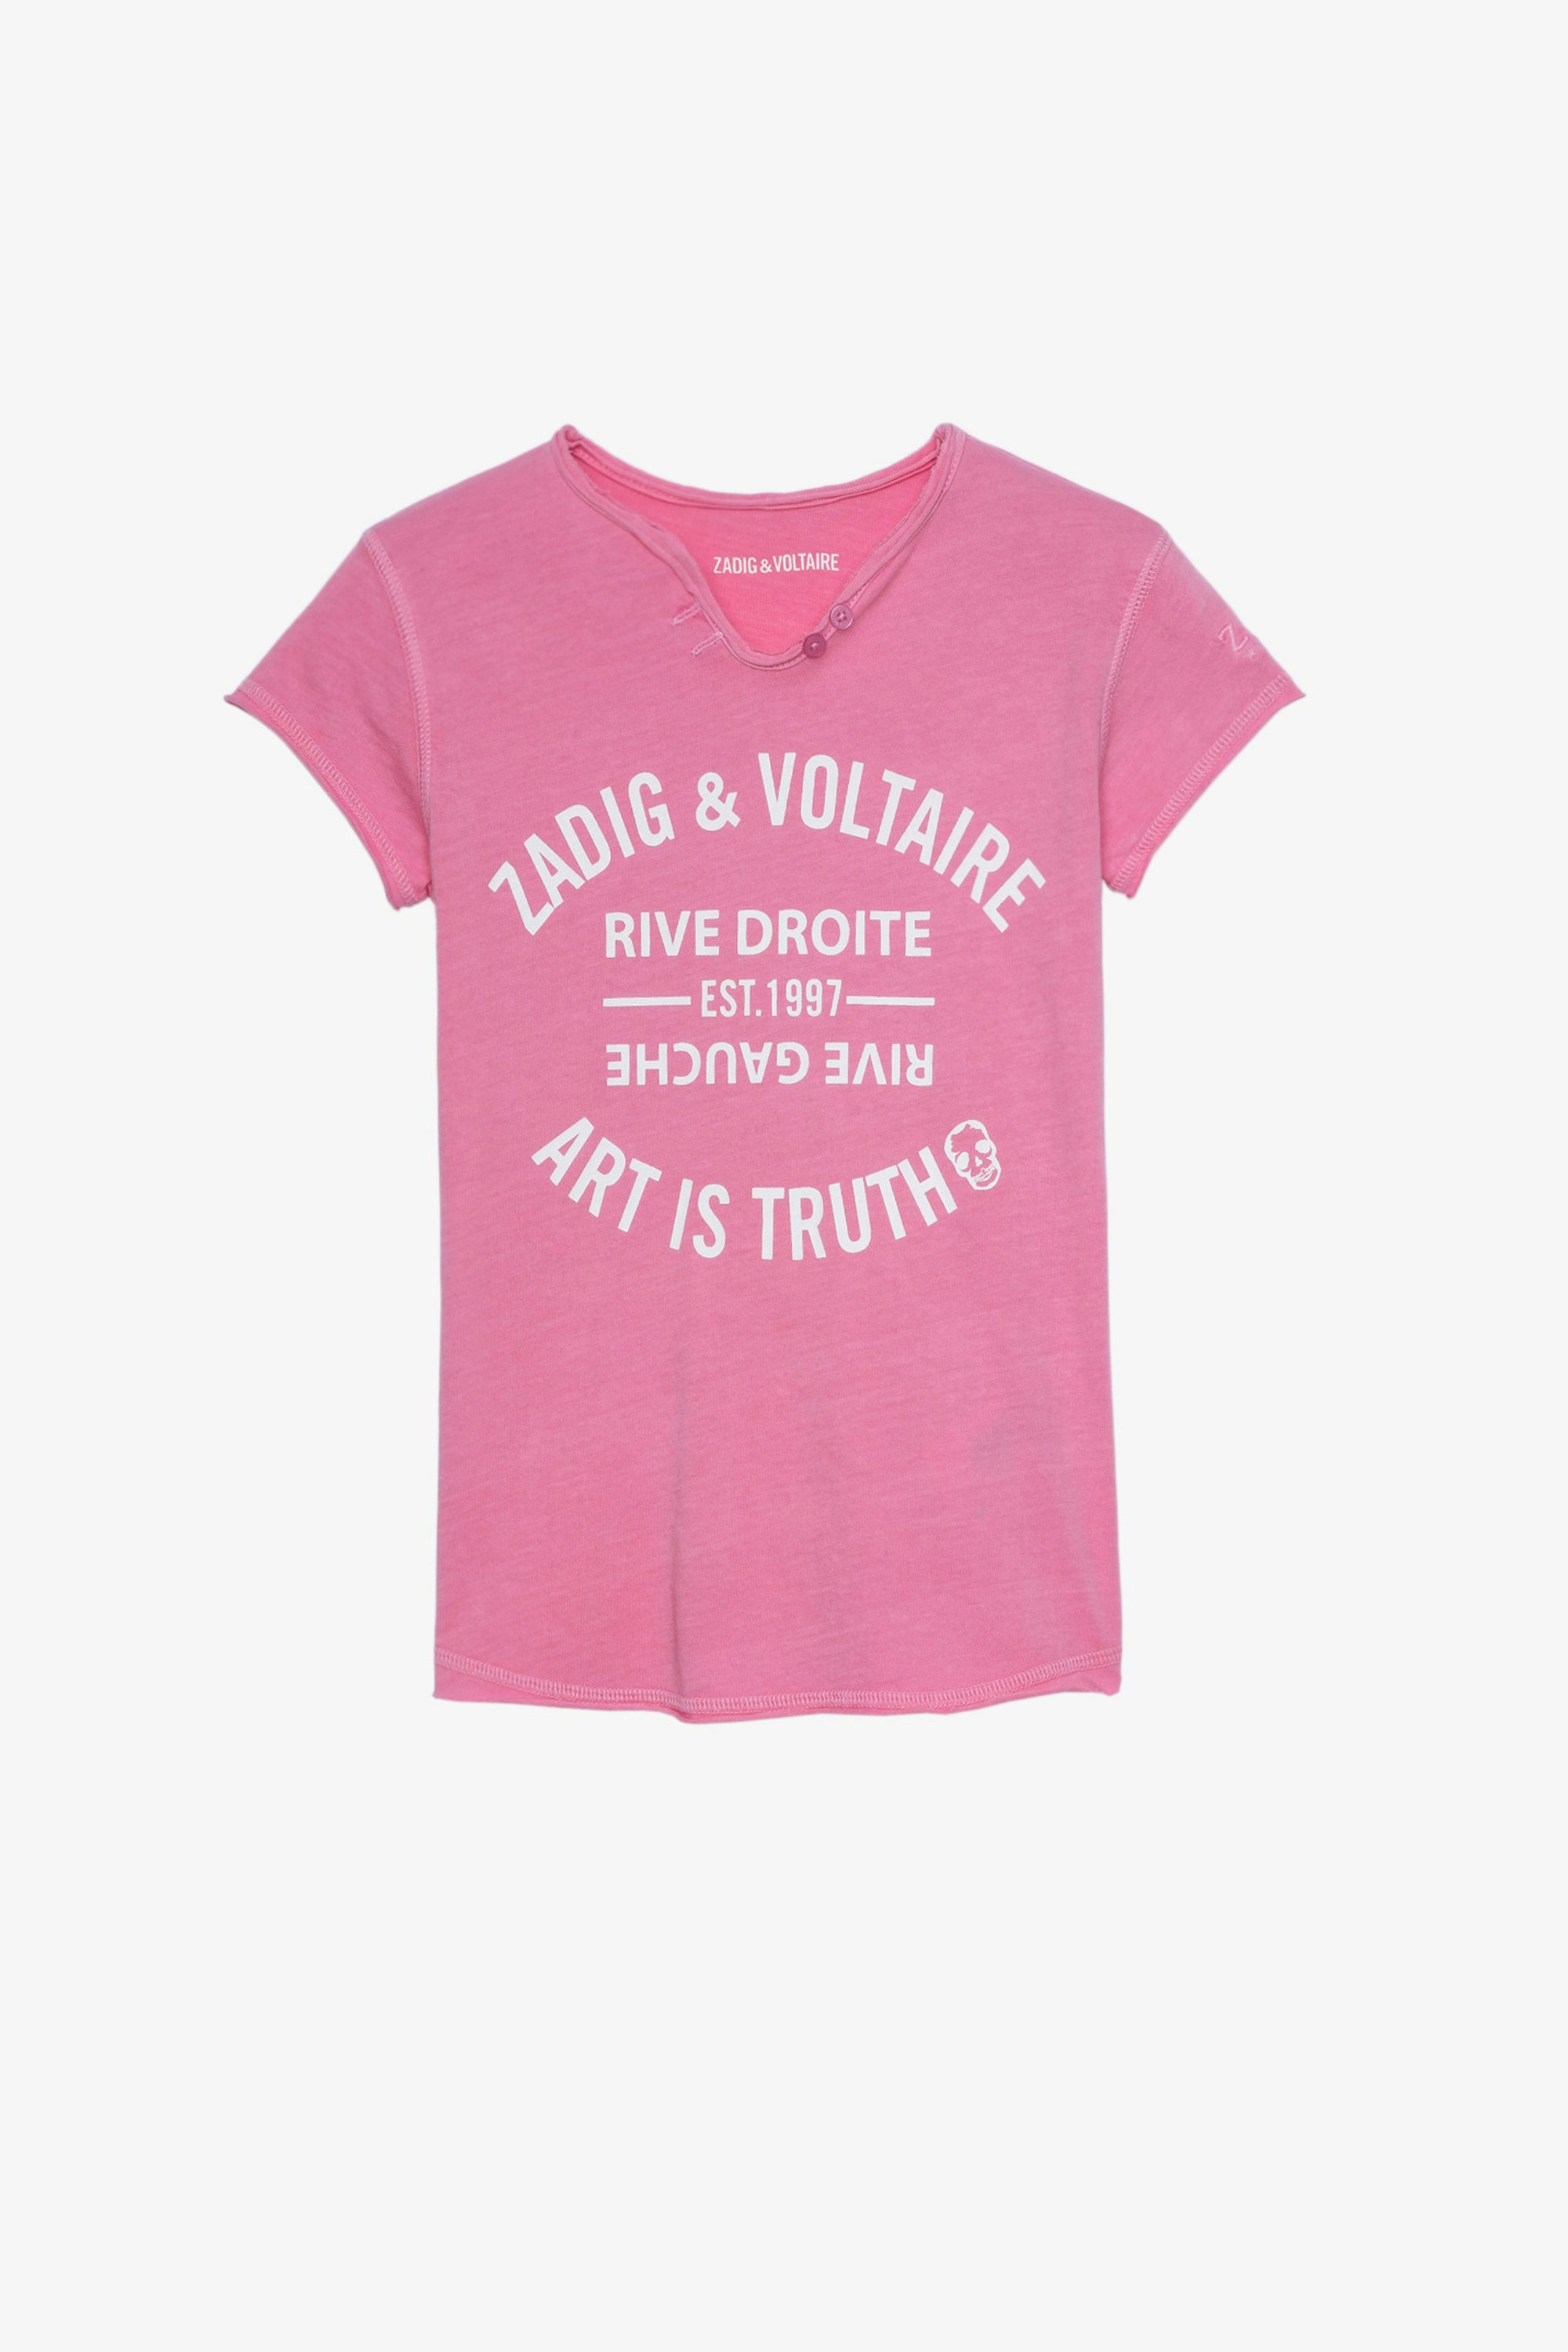 Boxo Children's T-Shirt Children's cotton t-shirt in pink